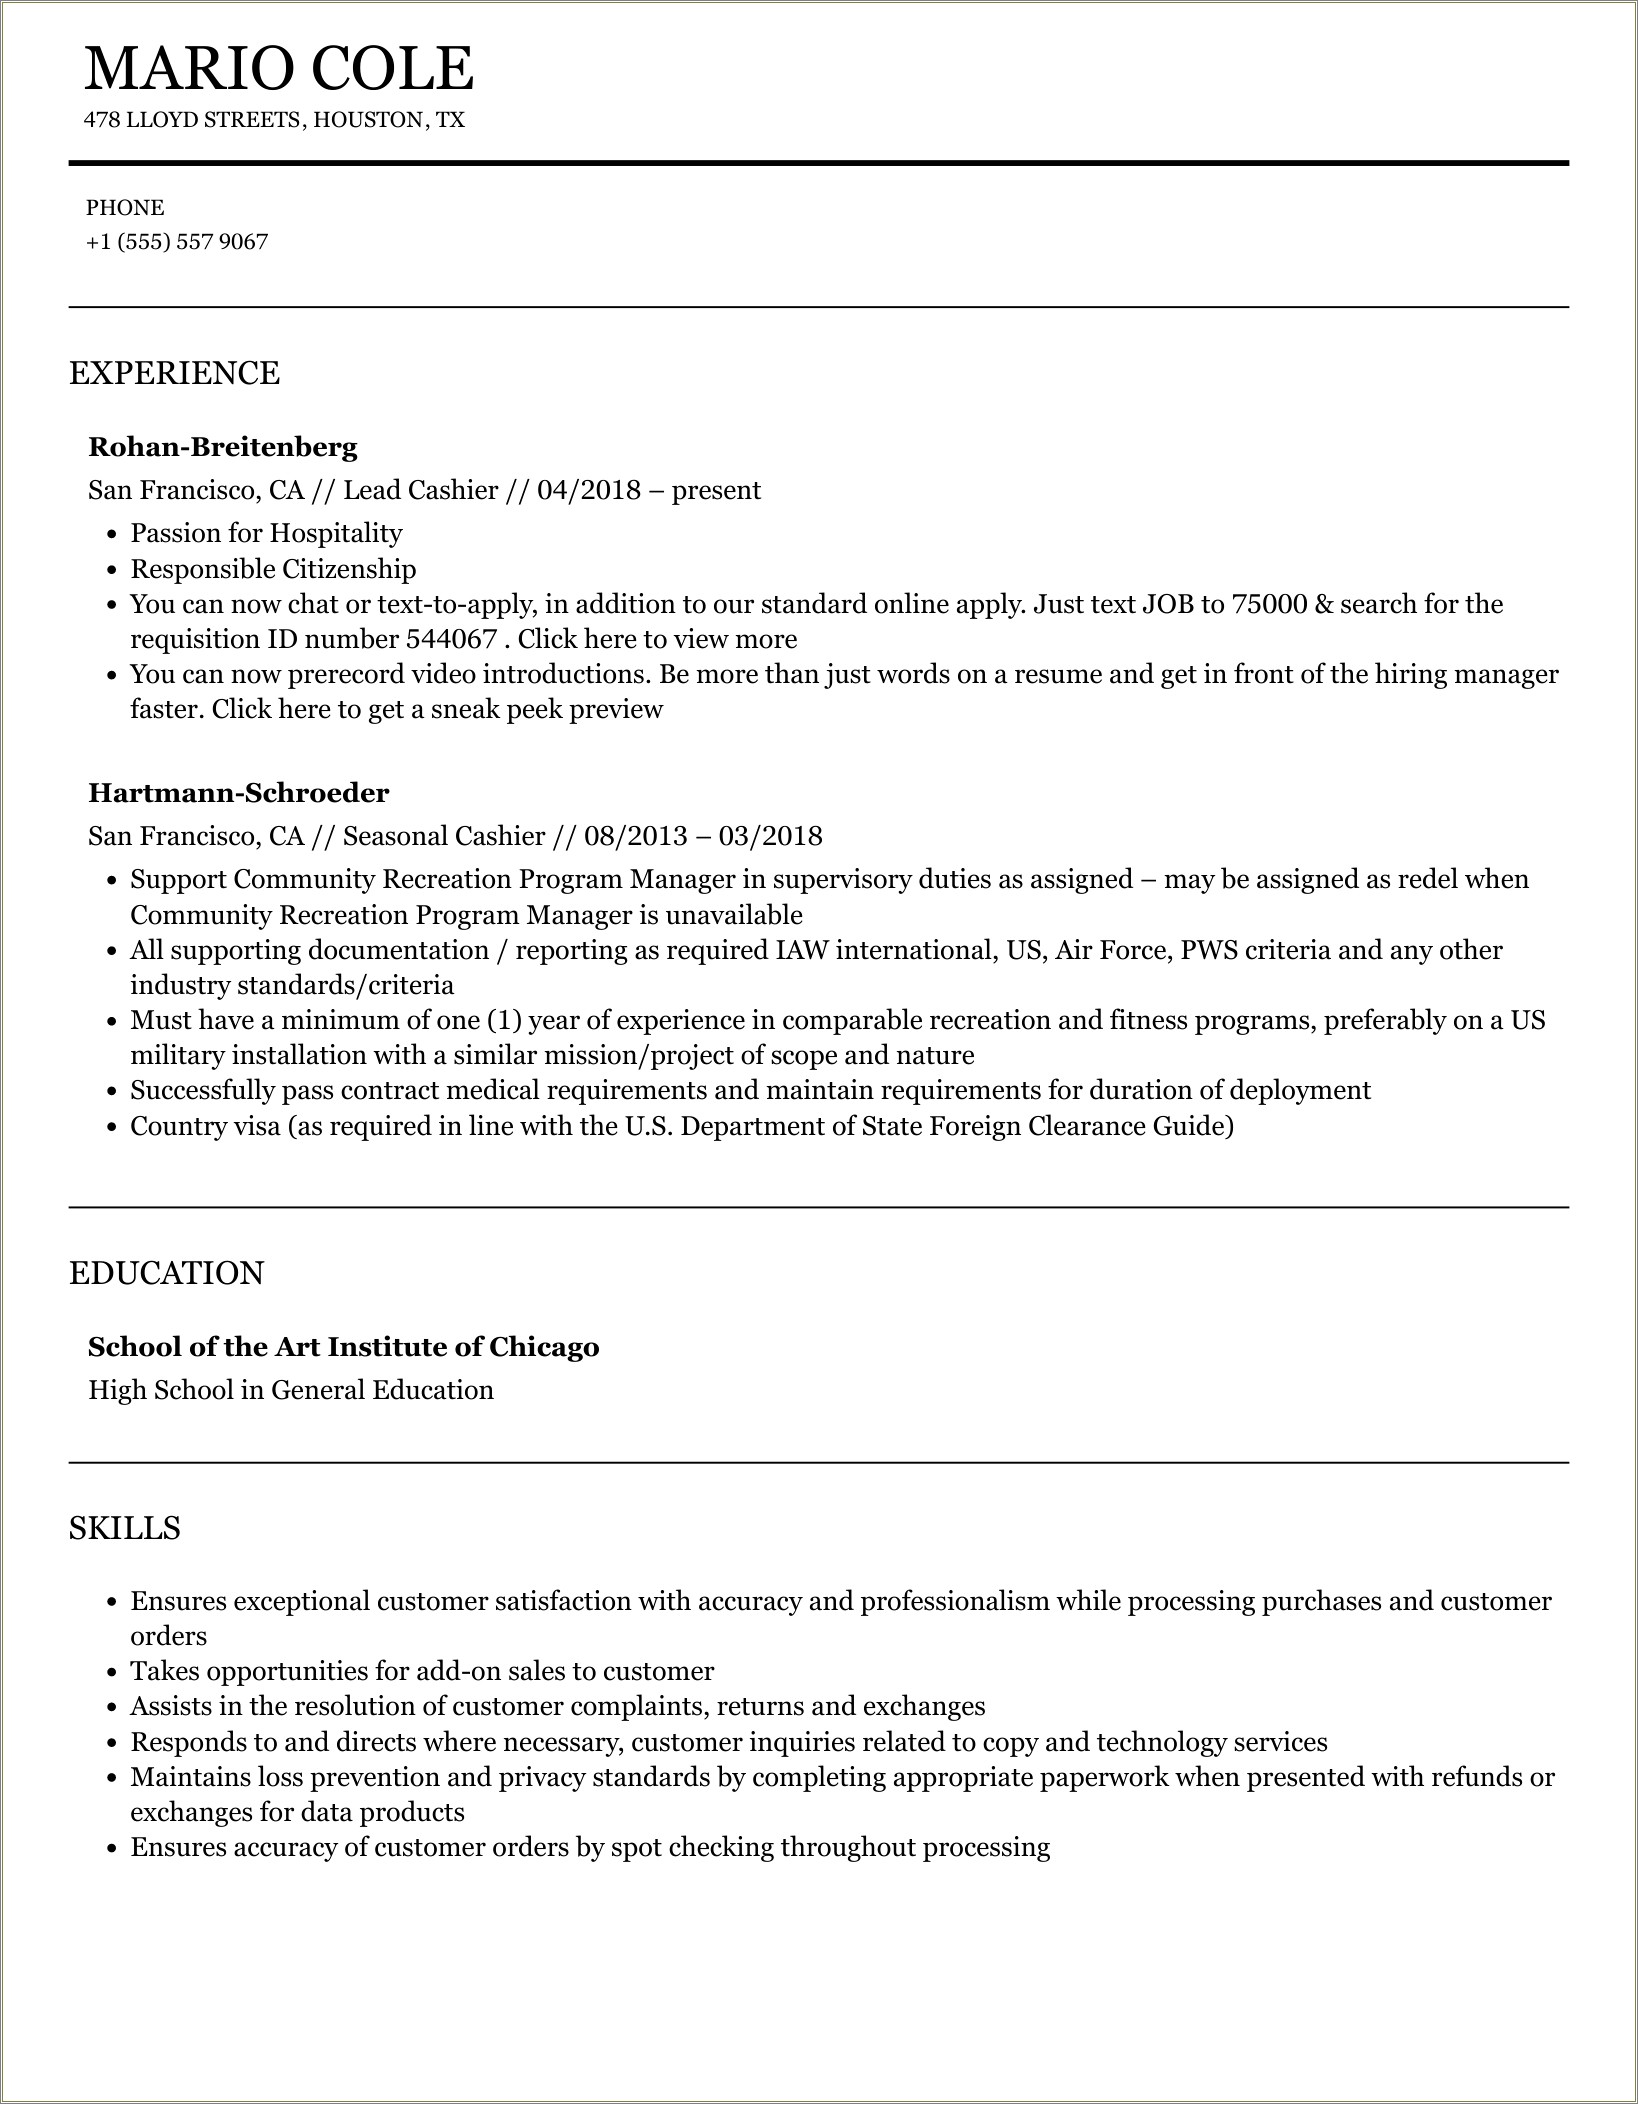 Job Description Resume For Finish Line Cashier